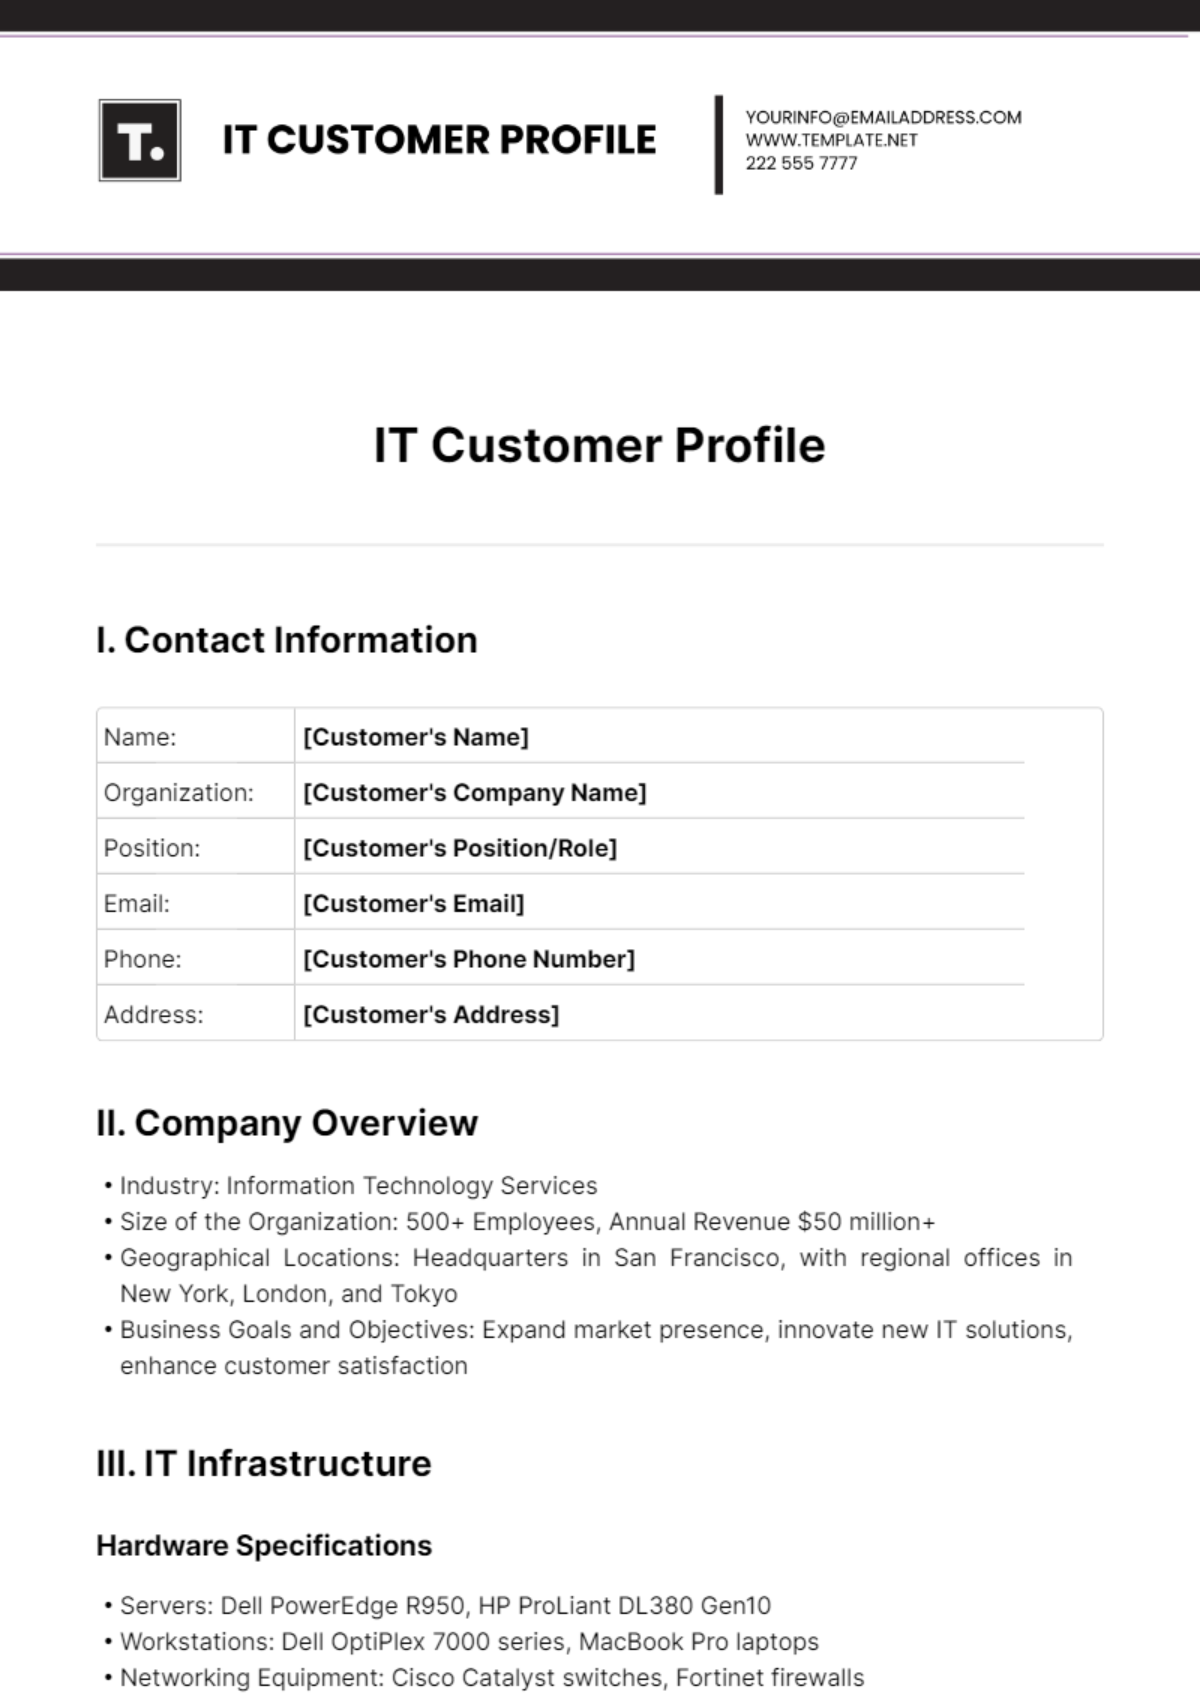 IT Customer Profile Template